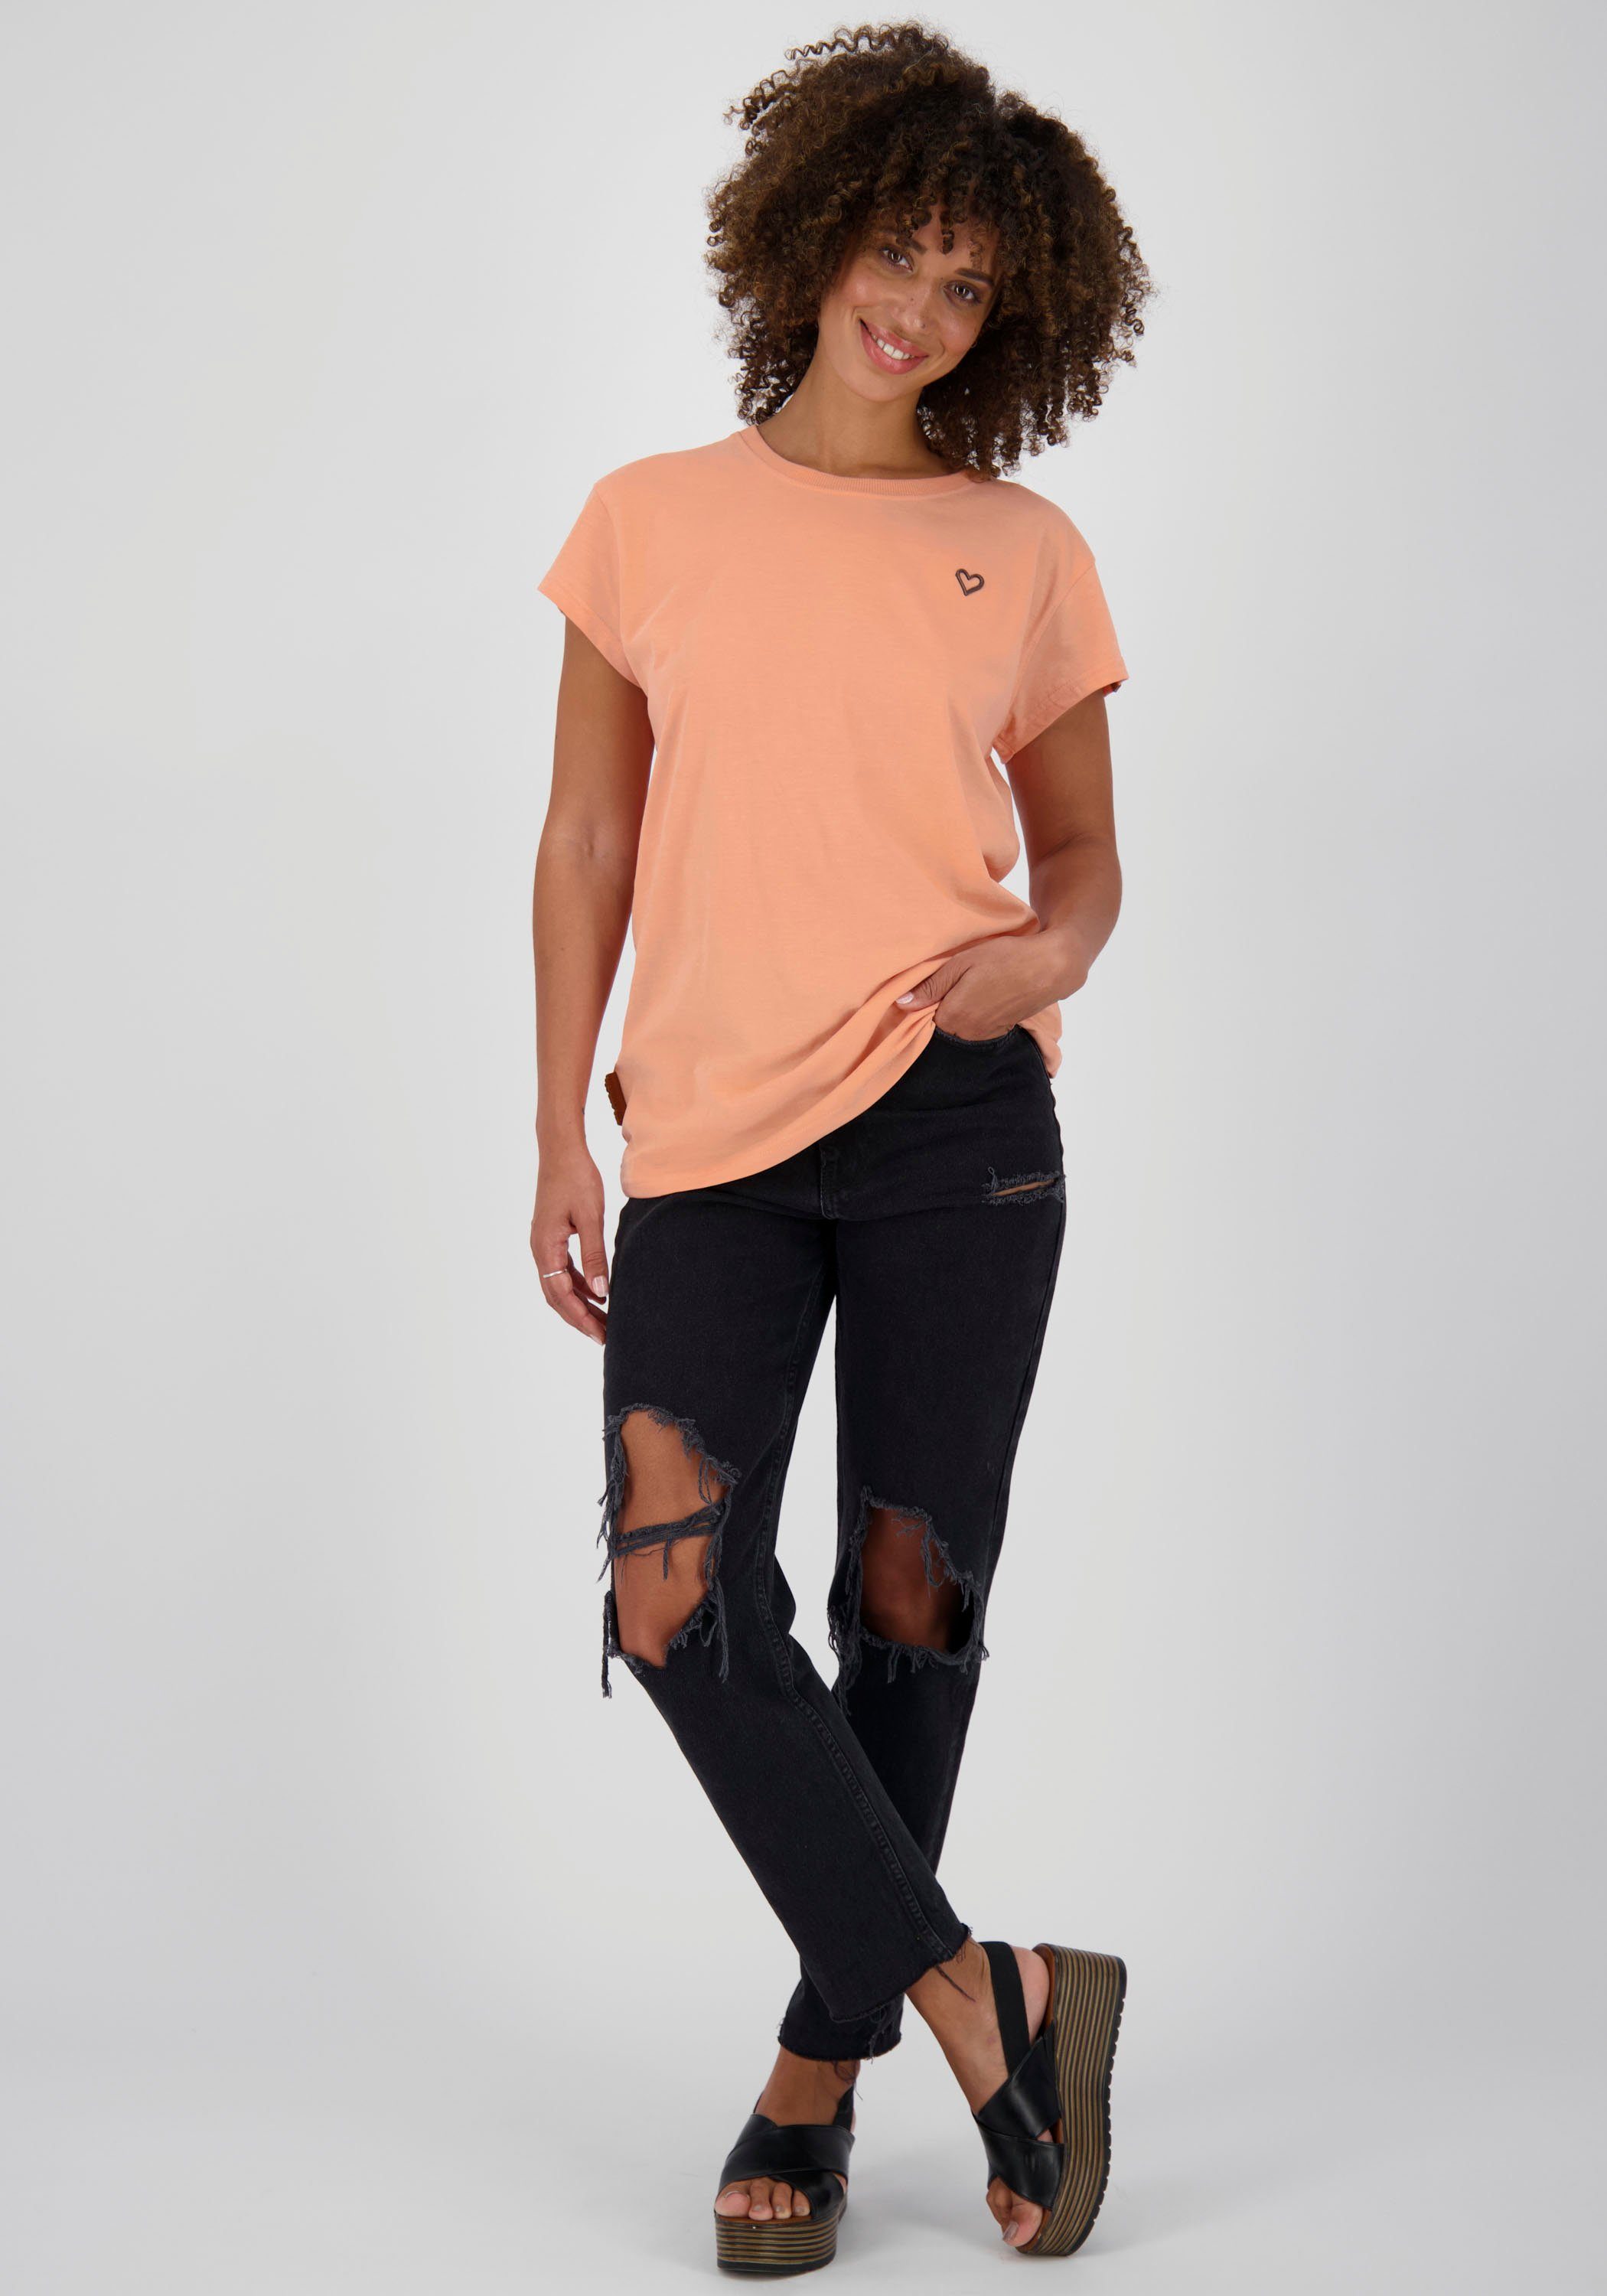 sportives Alife T-Shirt Kickin peach schönen & Longshirt Uni-Farben MaxiAK A in